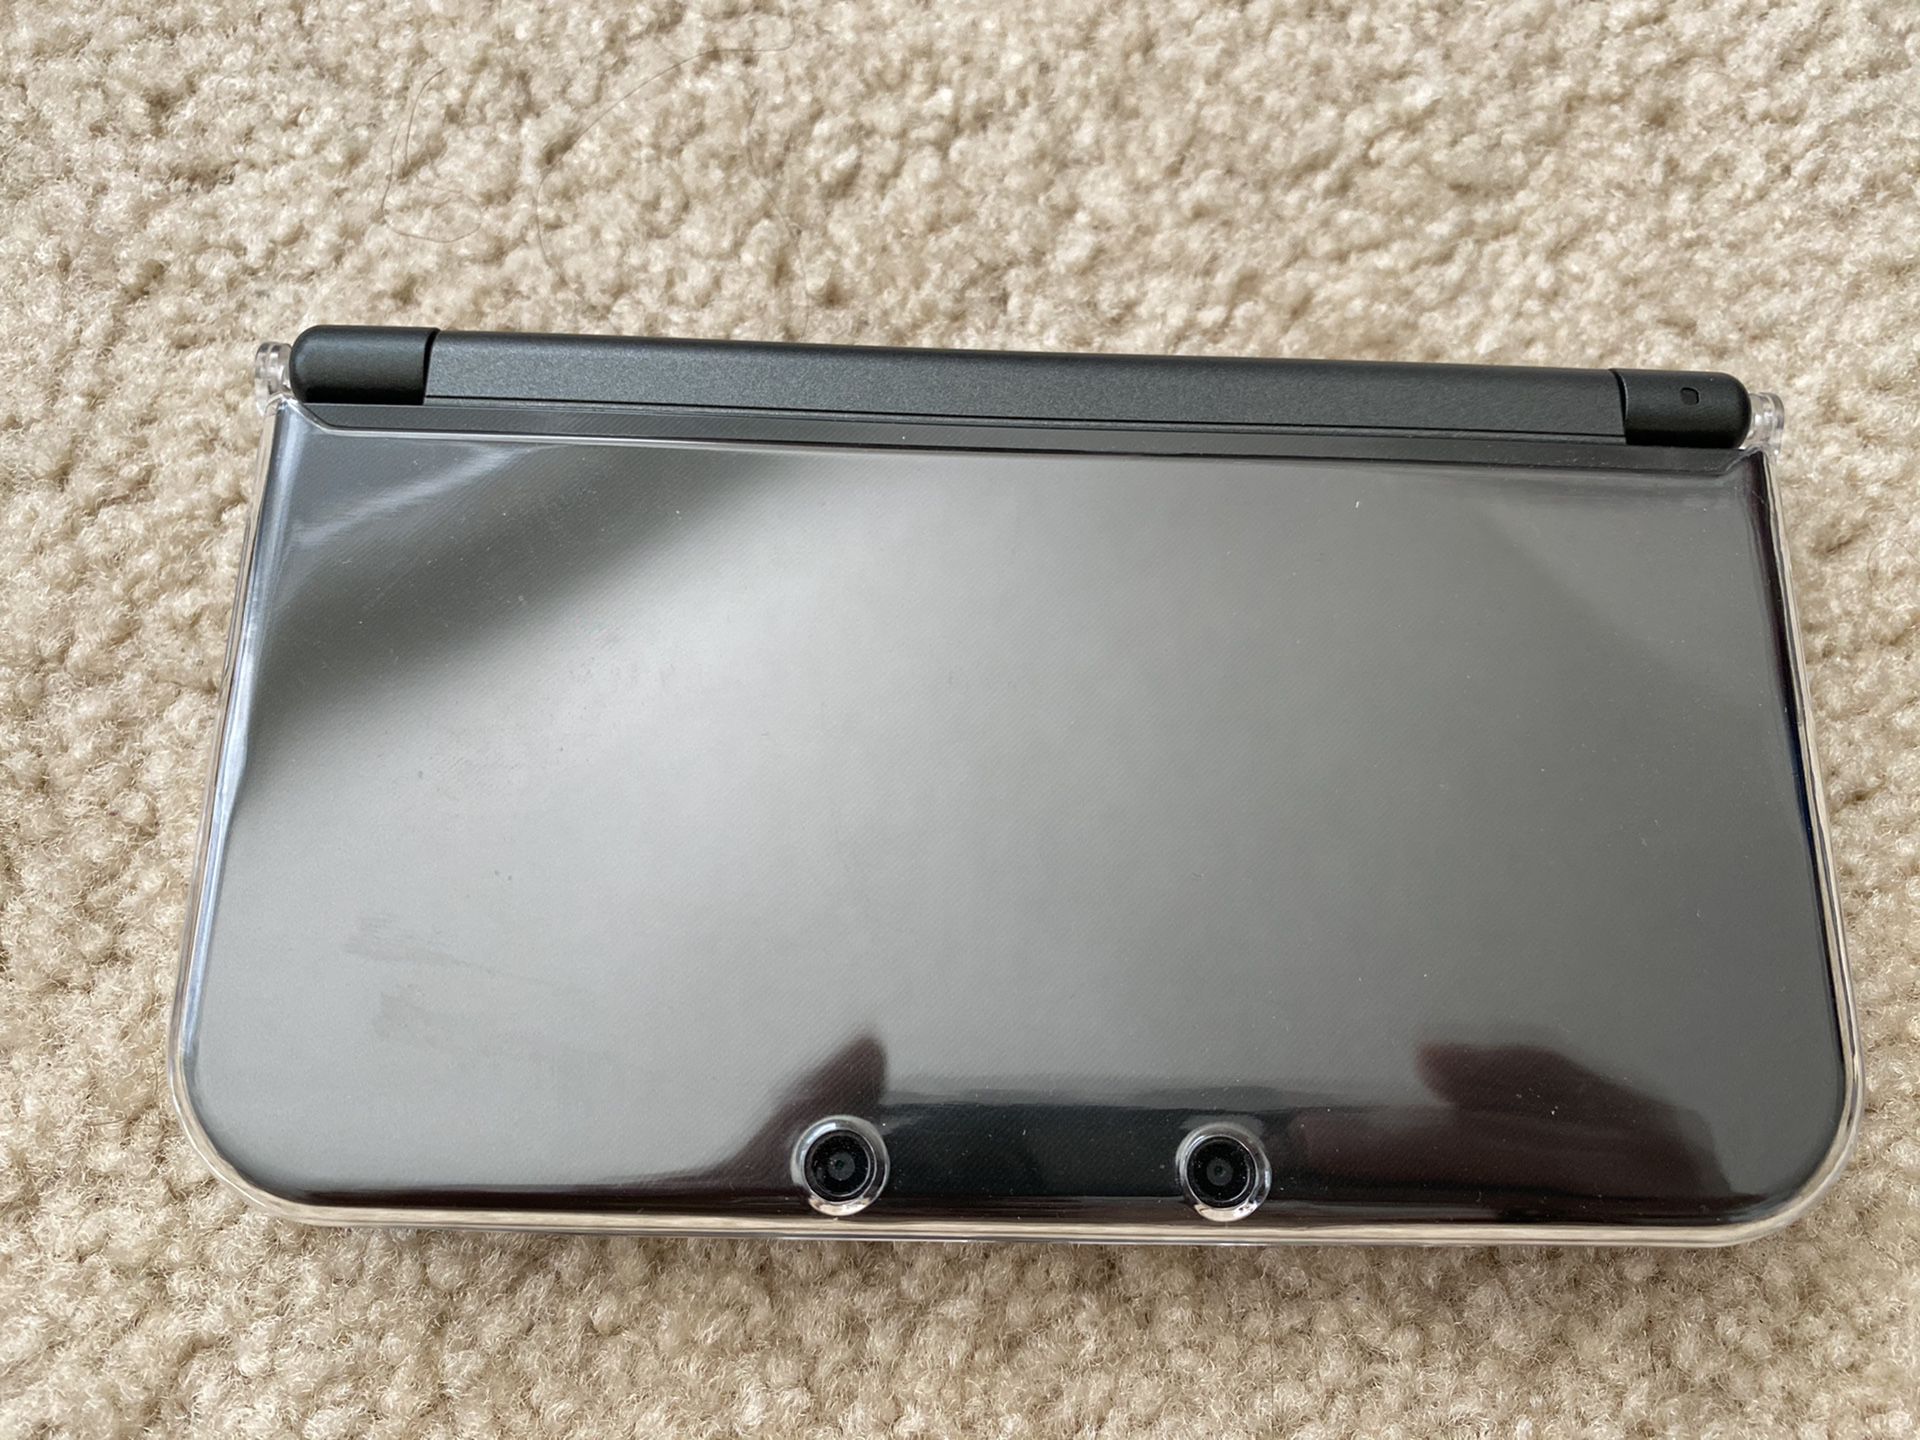 Nintendo “new” 3DS XL model